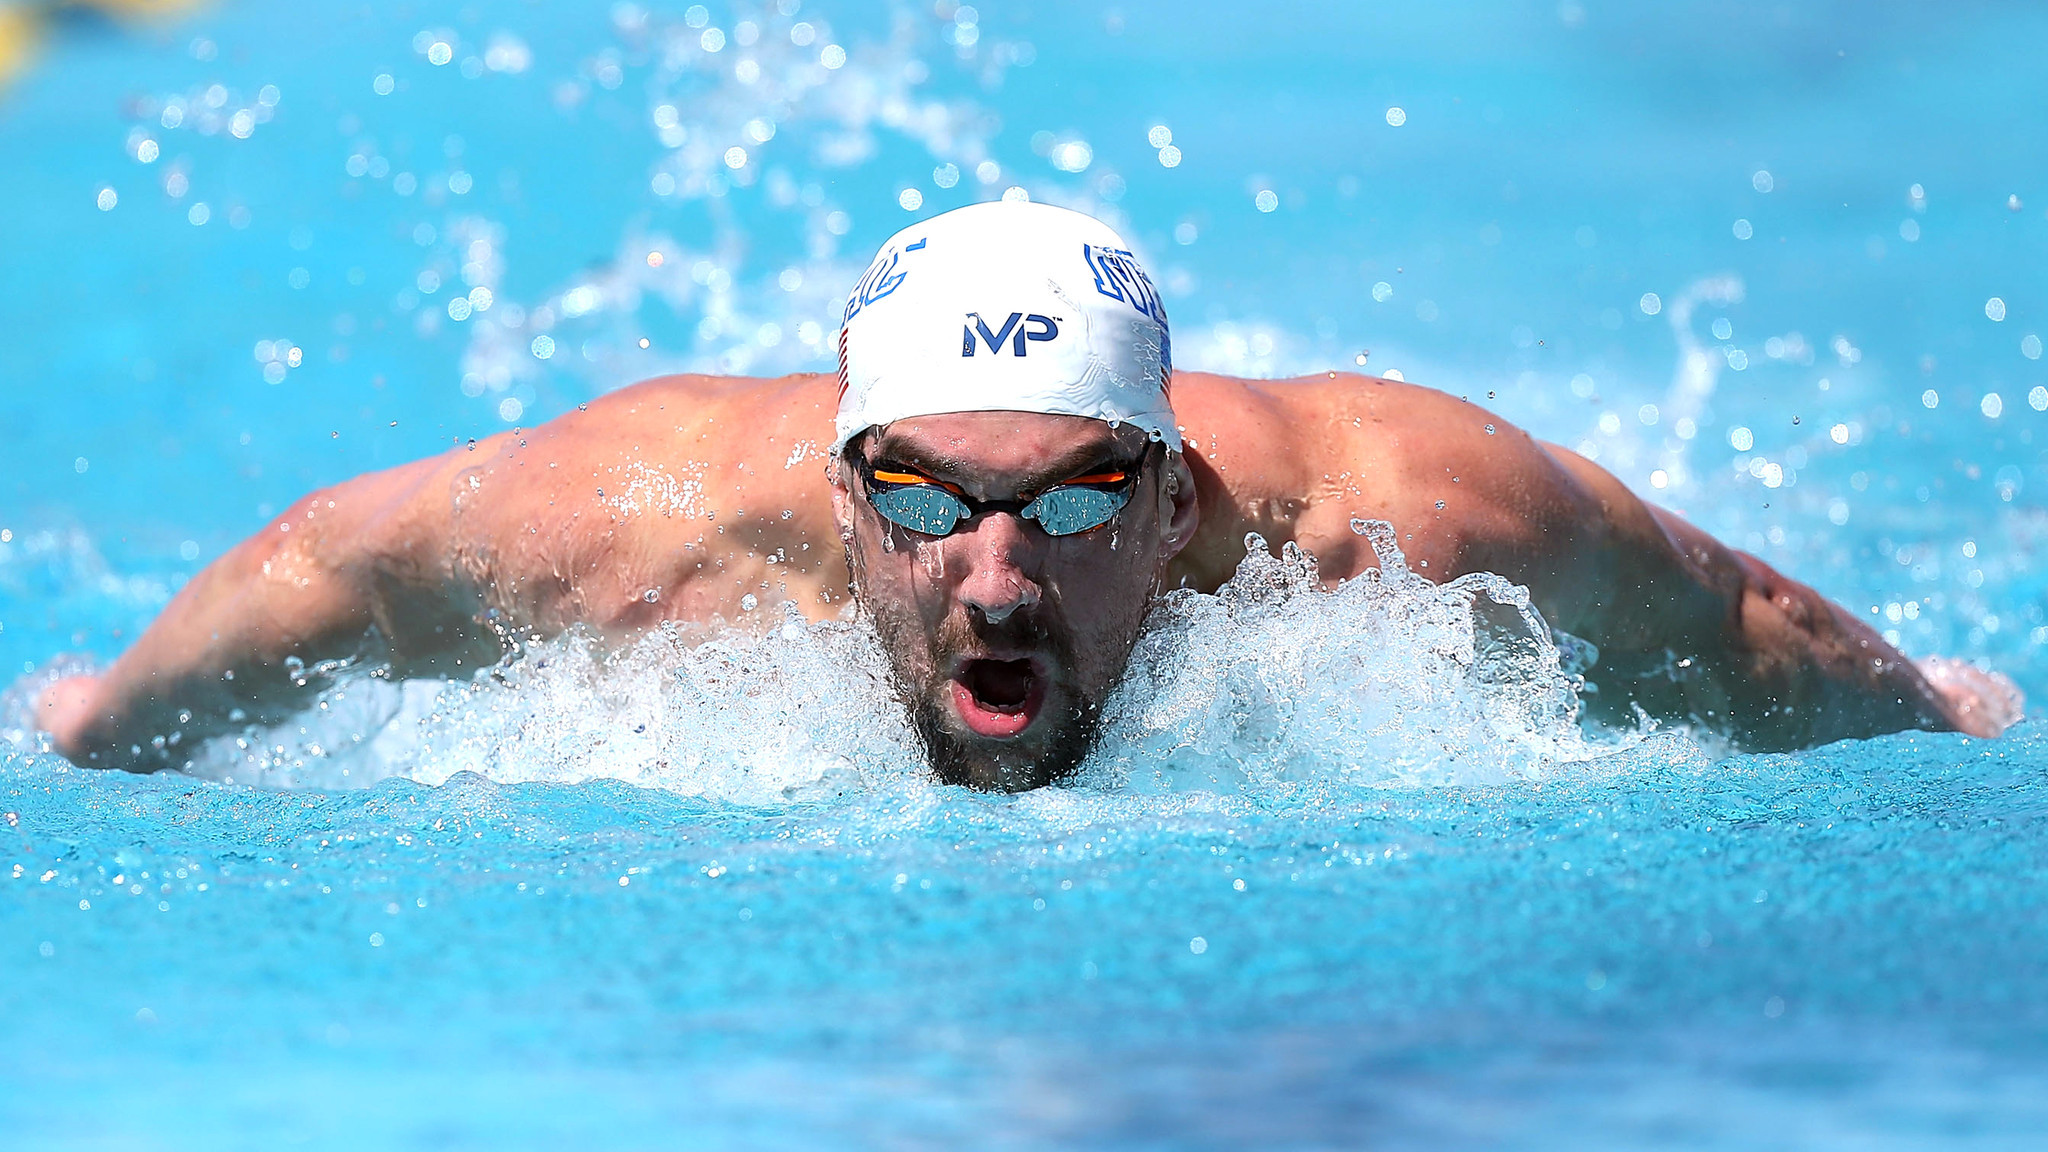 
Huyền thoại Michael Phelps.
